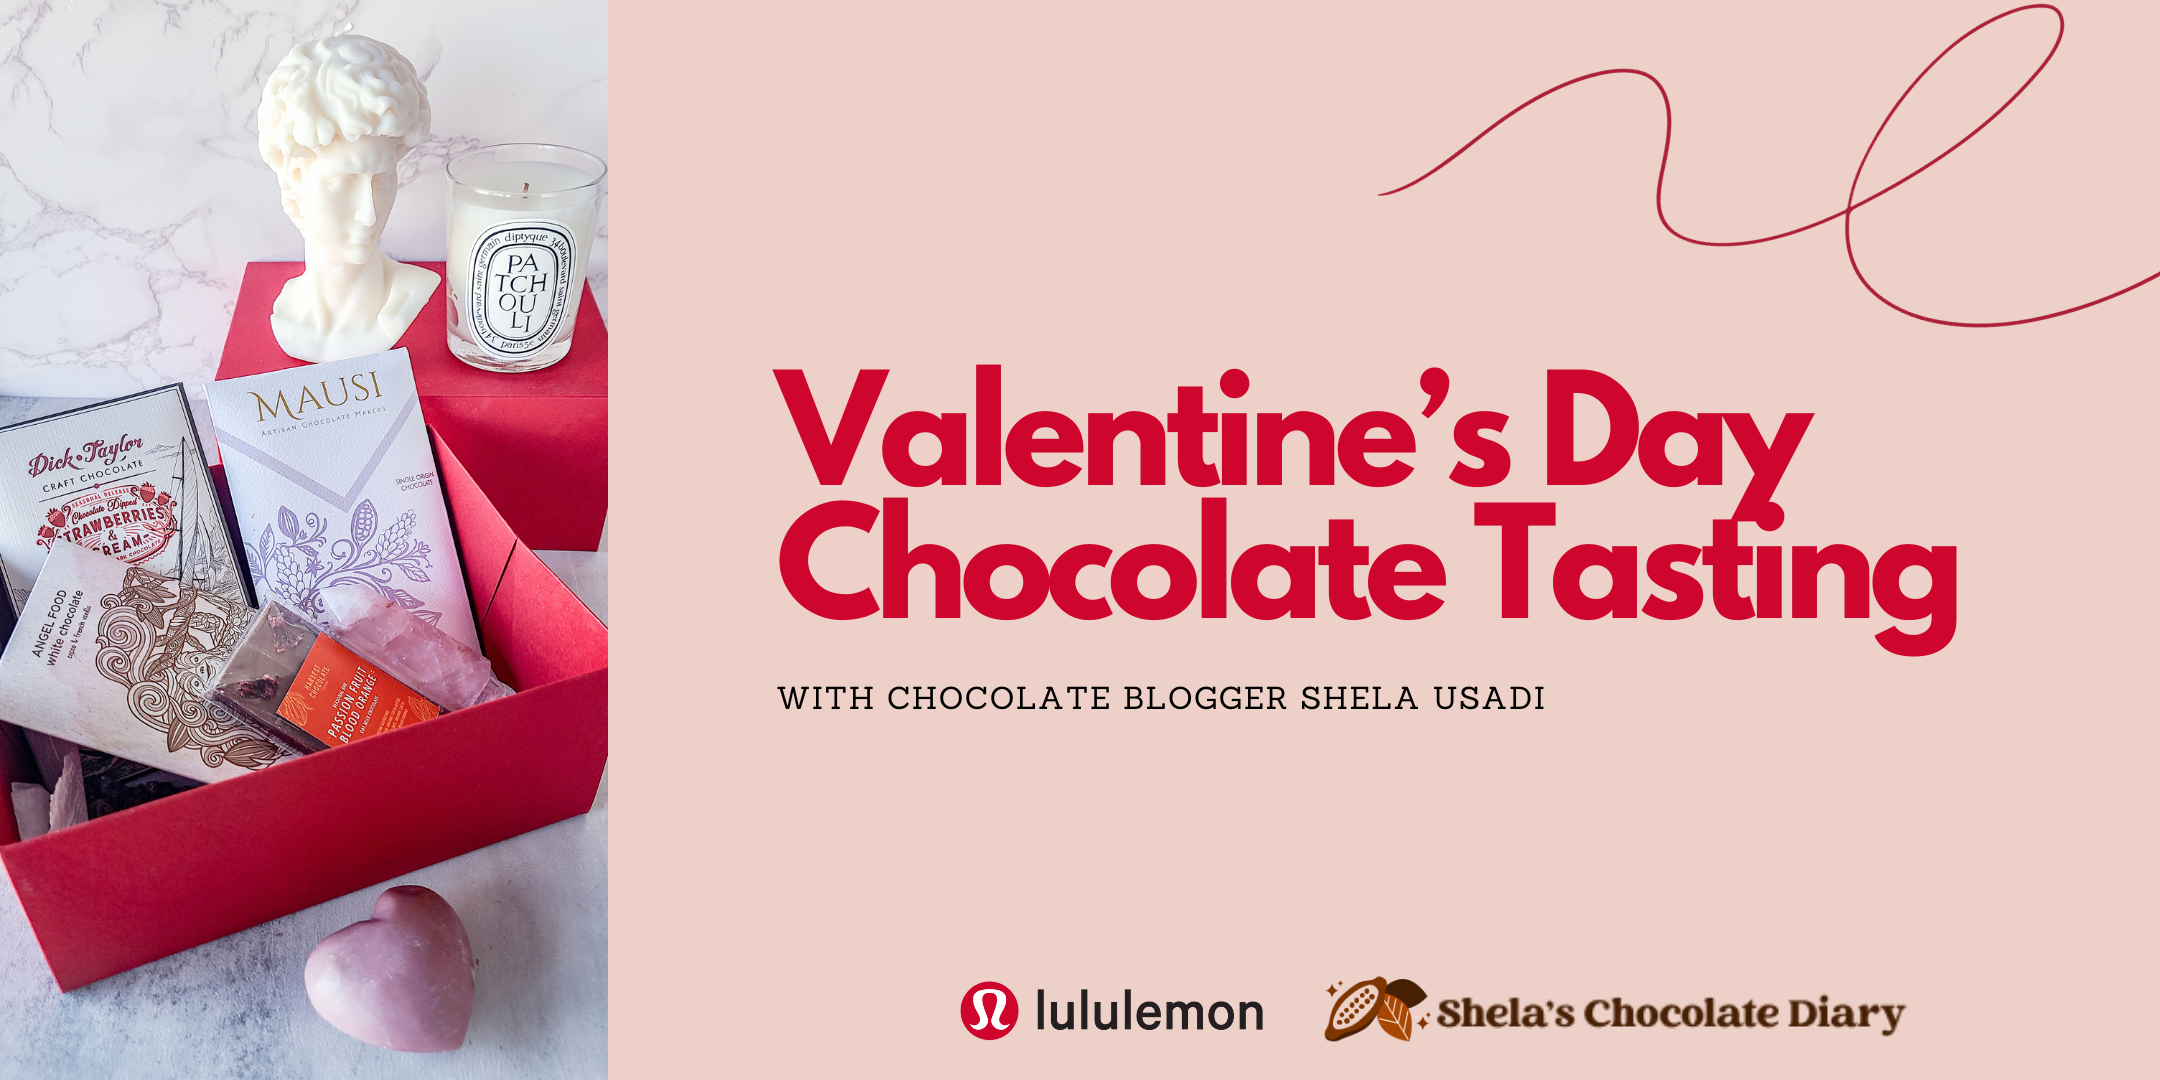 Valentine's Day Chocolate Tasting with Chocolate Blogger Shela Usadi